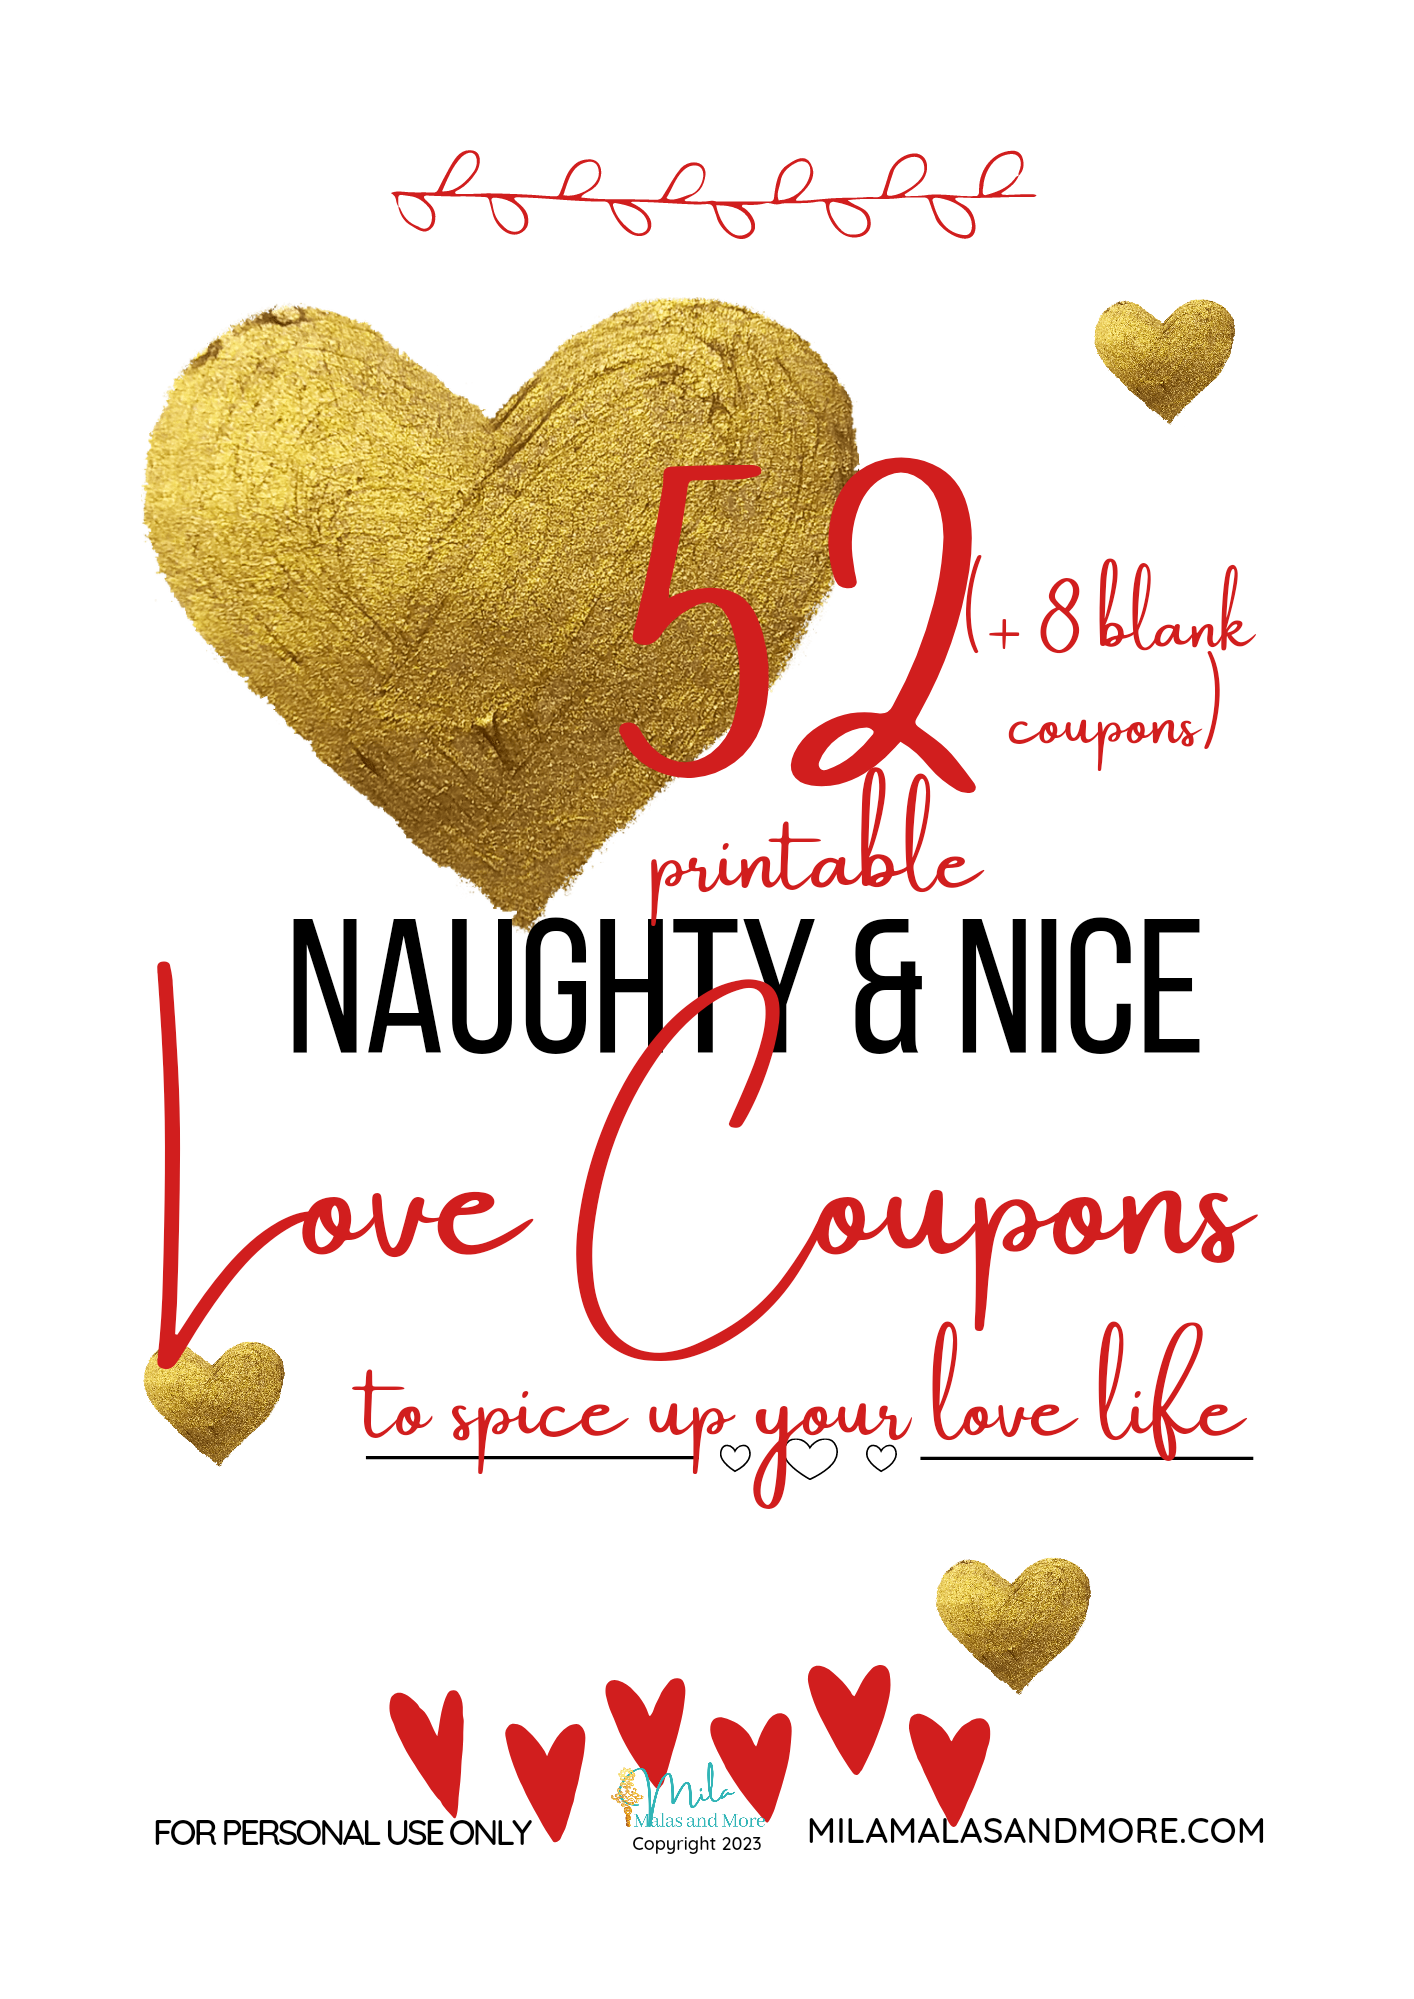 52 Naughty and Nice Love Coupons